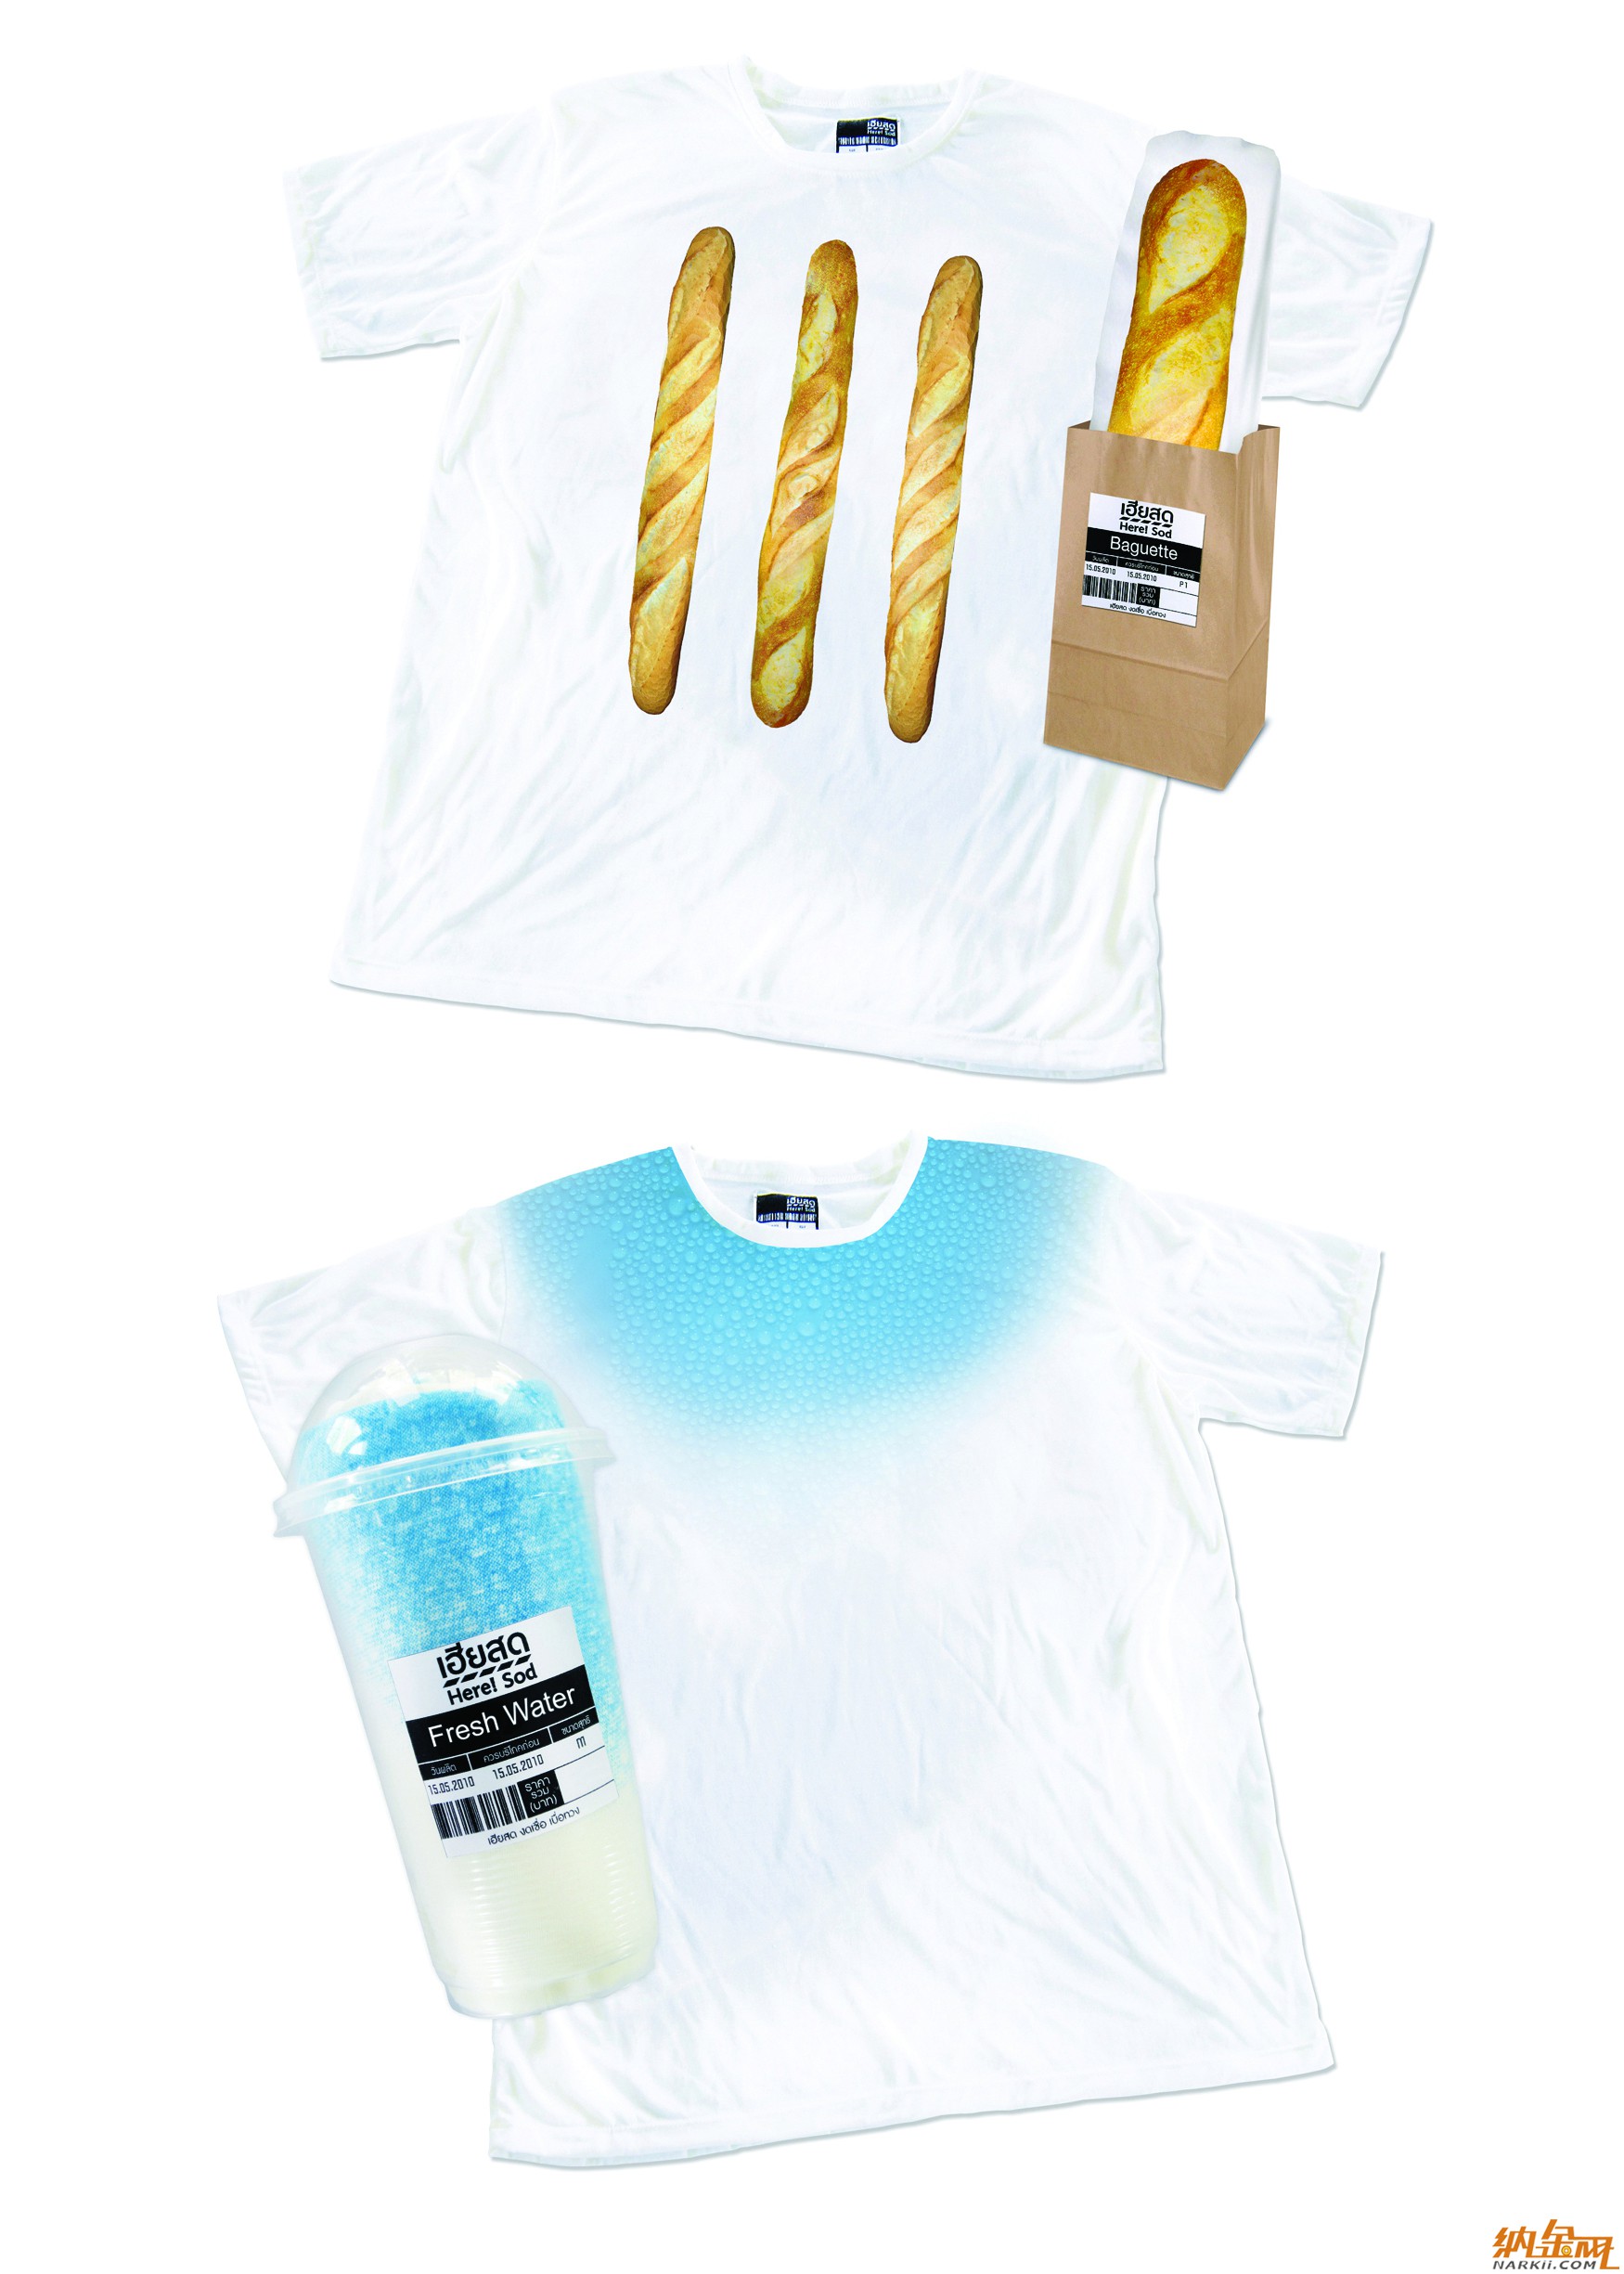 Here Sod T-Shirt Packaging003.jpg